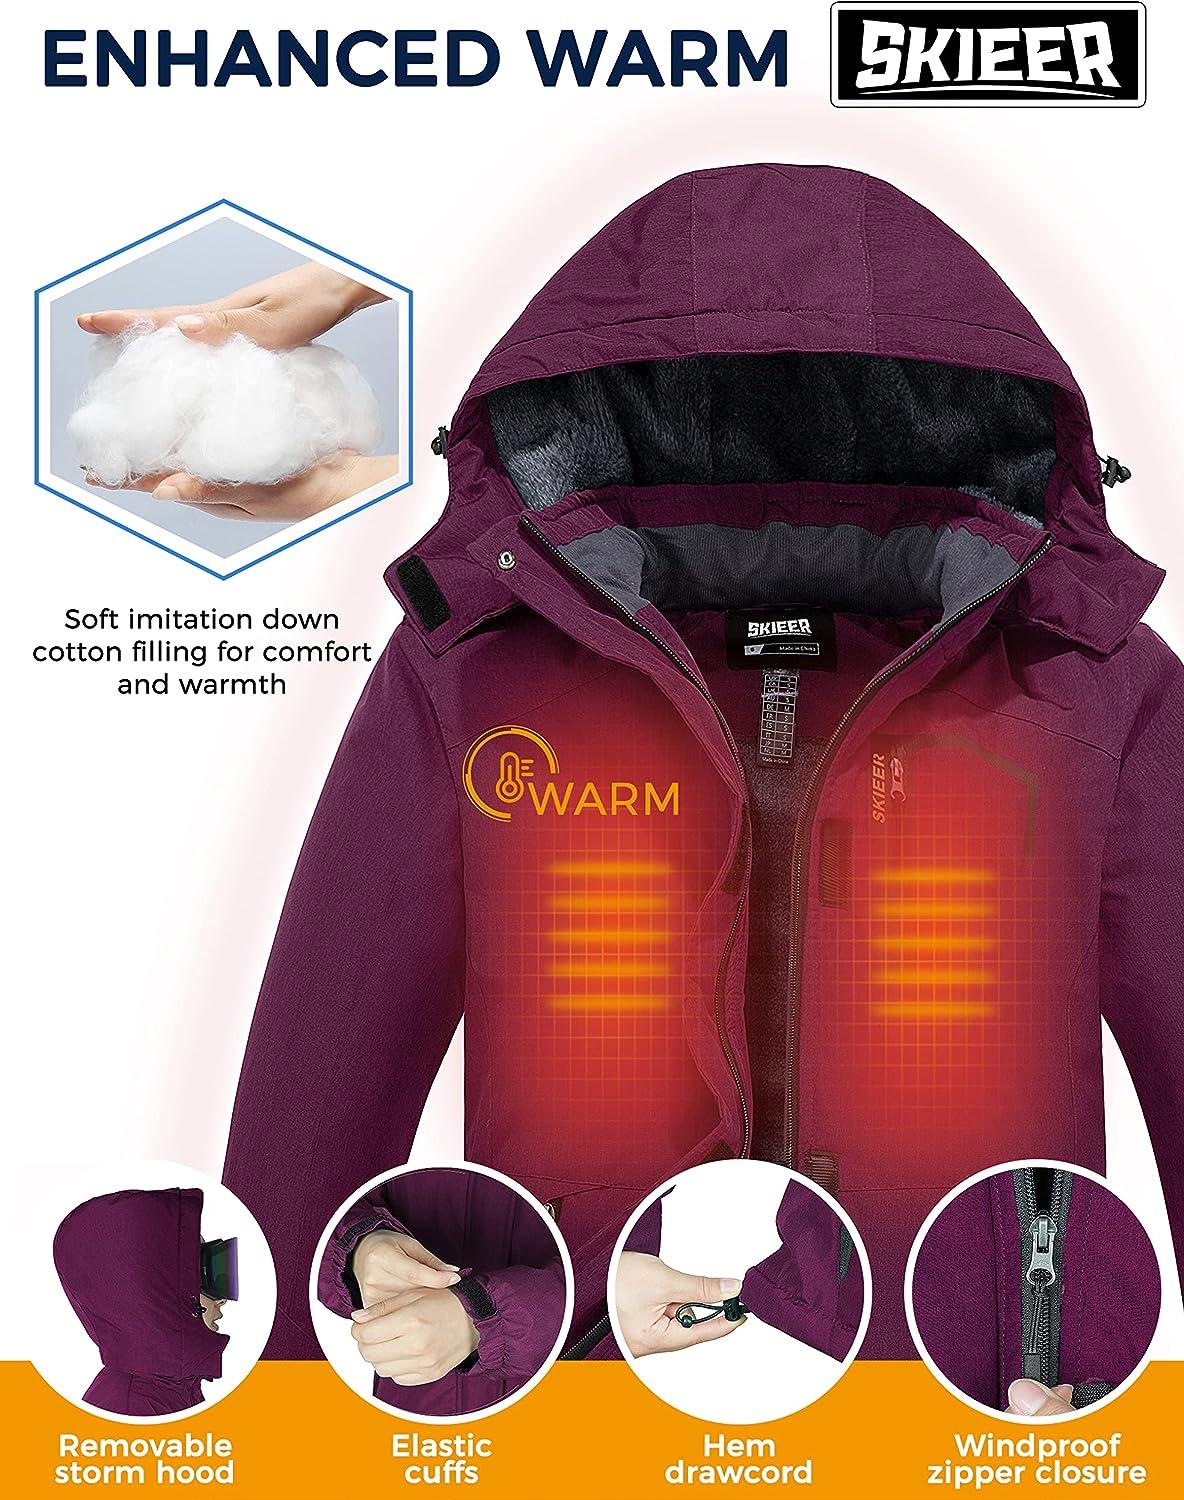 Skieer Women's Waterproof Ski Jacket Warm Winter Coat Fleece Snow Raincoats  X-Large Blending Purple